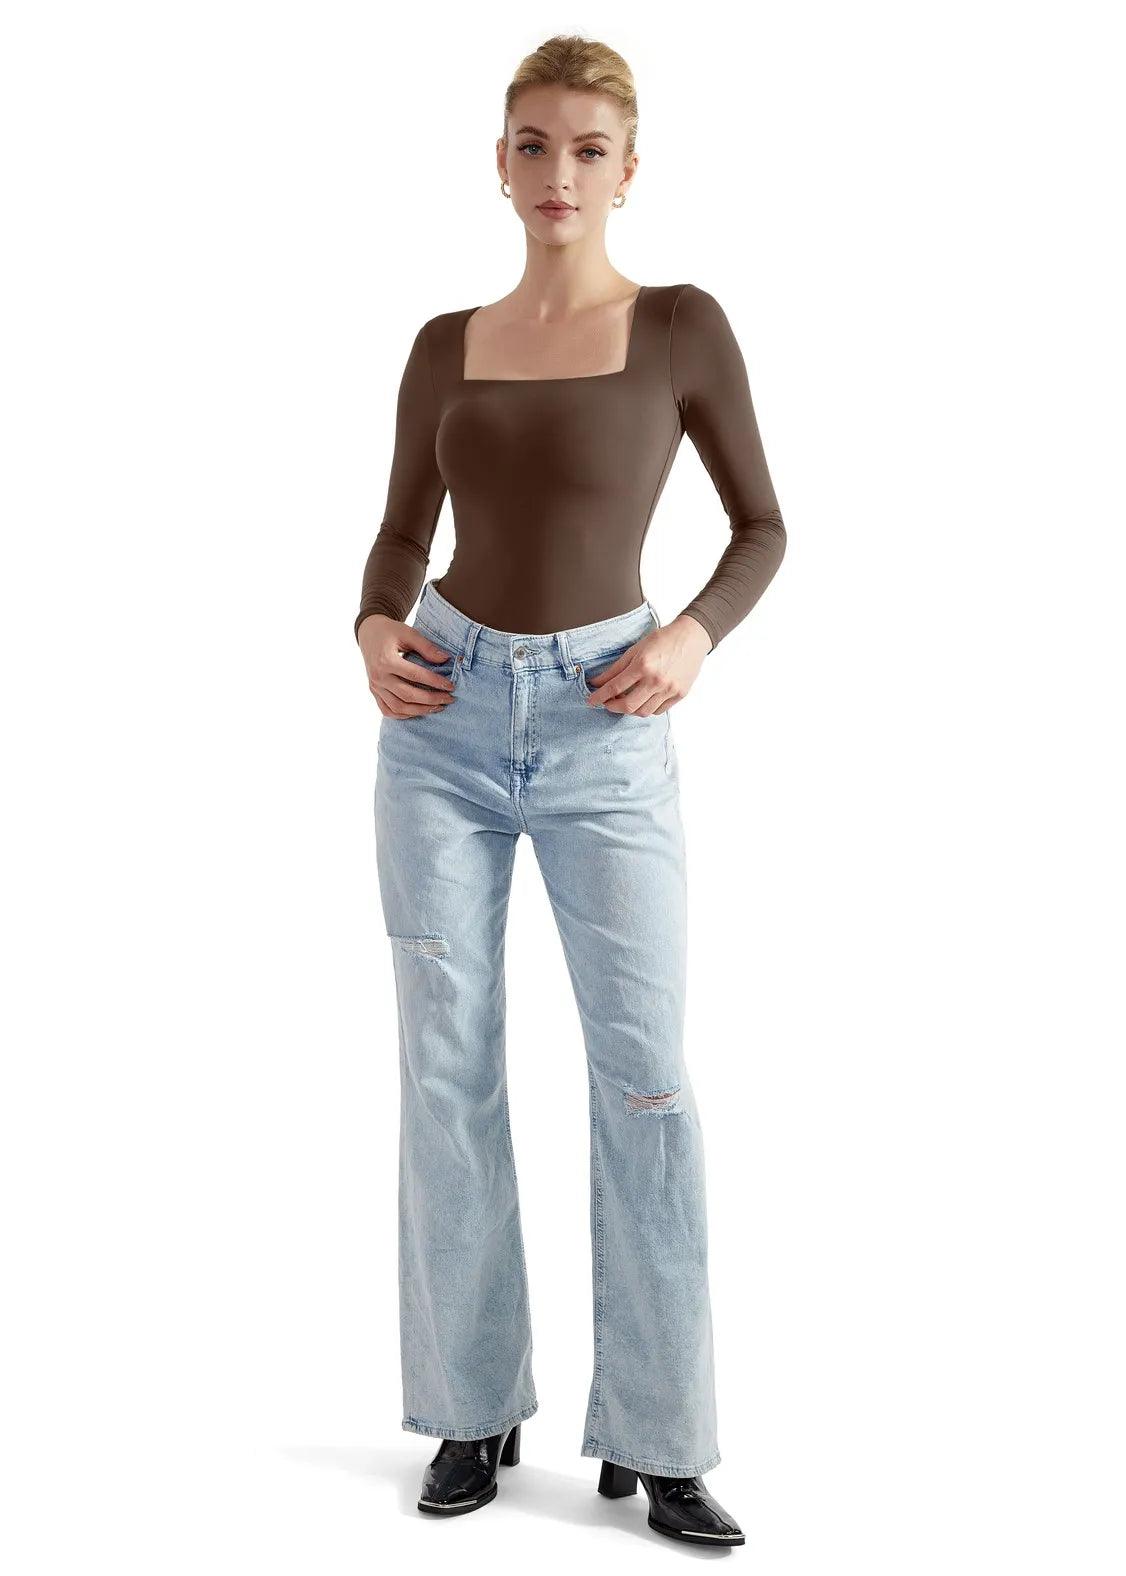 ALSLIAO Plus Size Women Turtleneck Bodysuit Knit Top Long Sleeve SlimT-Shirt  Sweater Bean Paste 5XL 